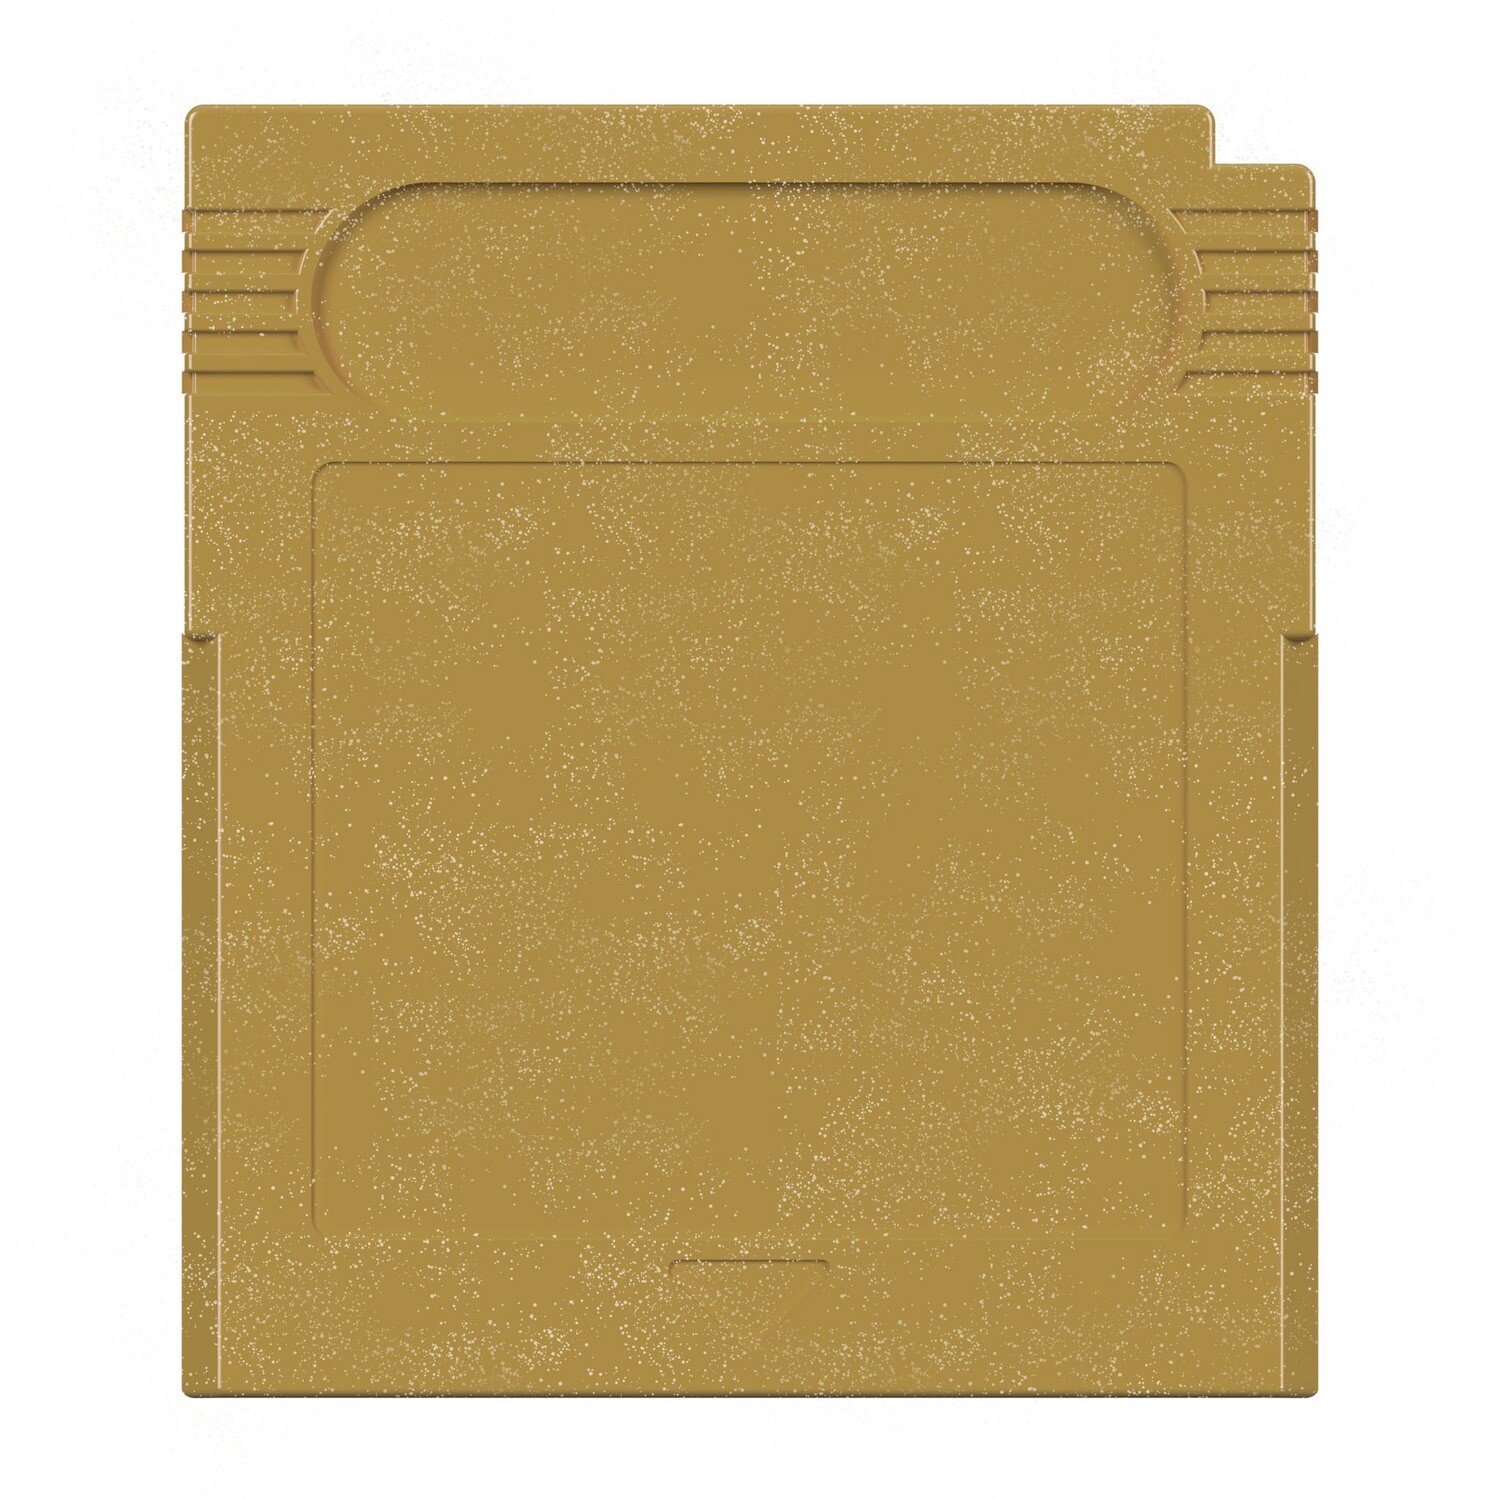 Game Boy Original Cartridge Shell (Gold)